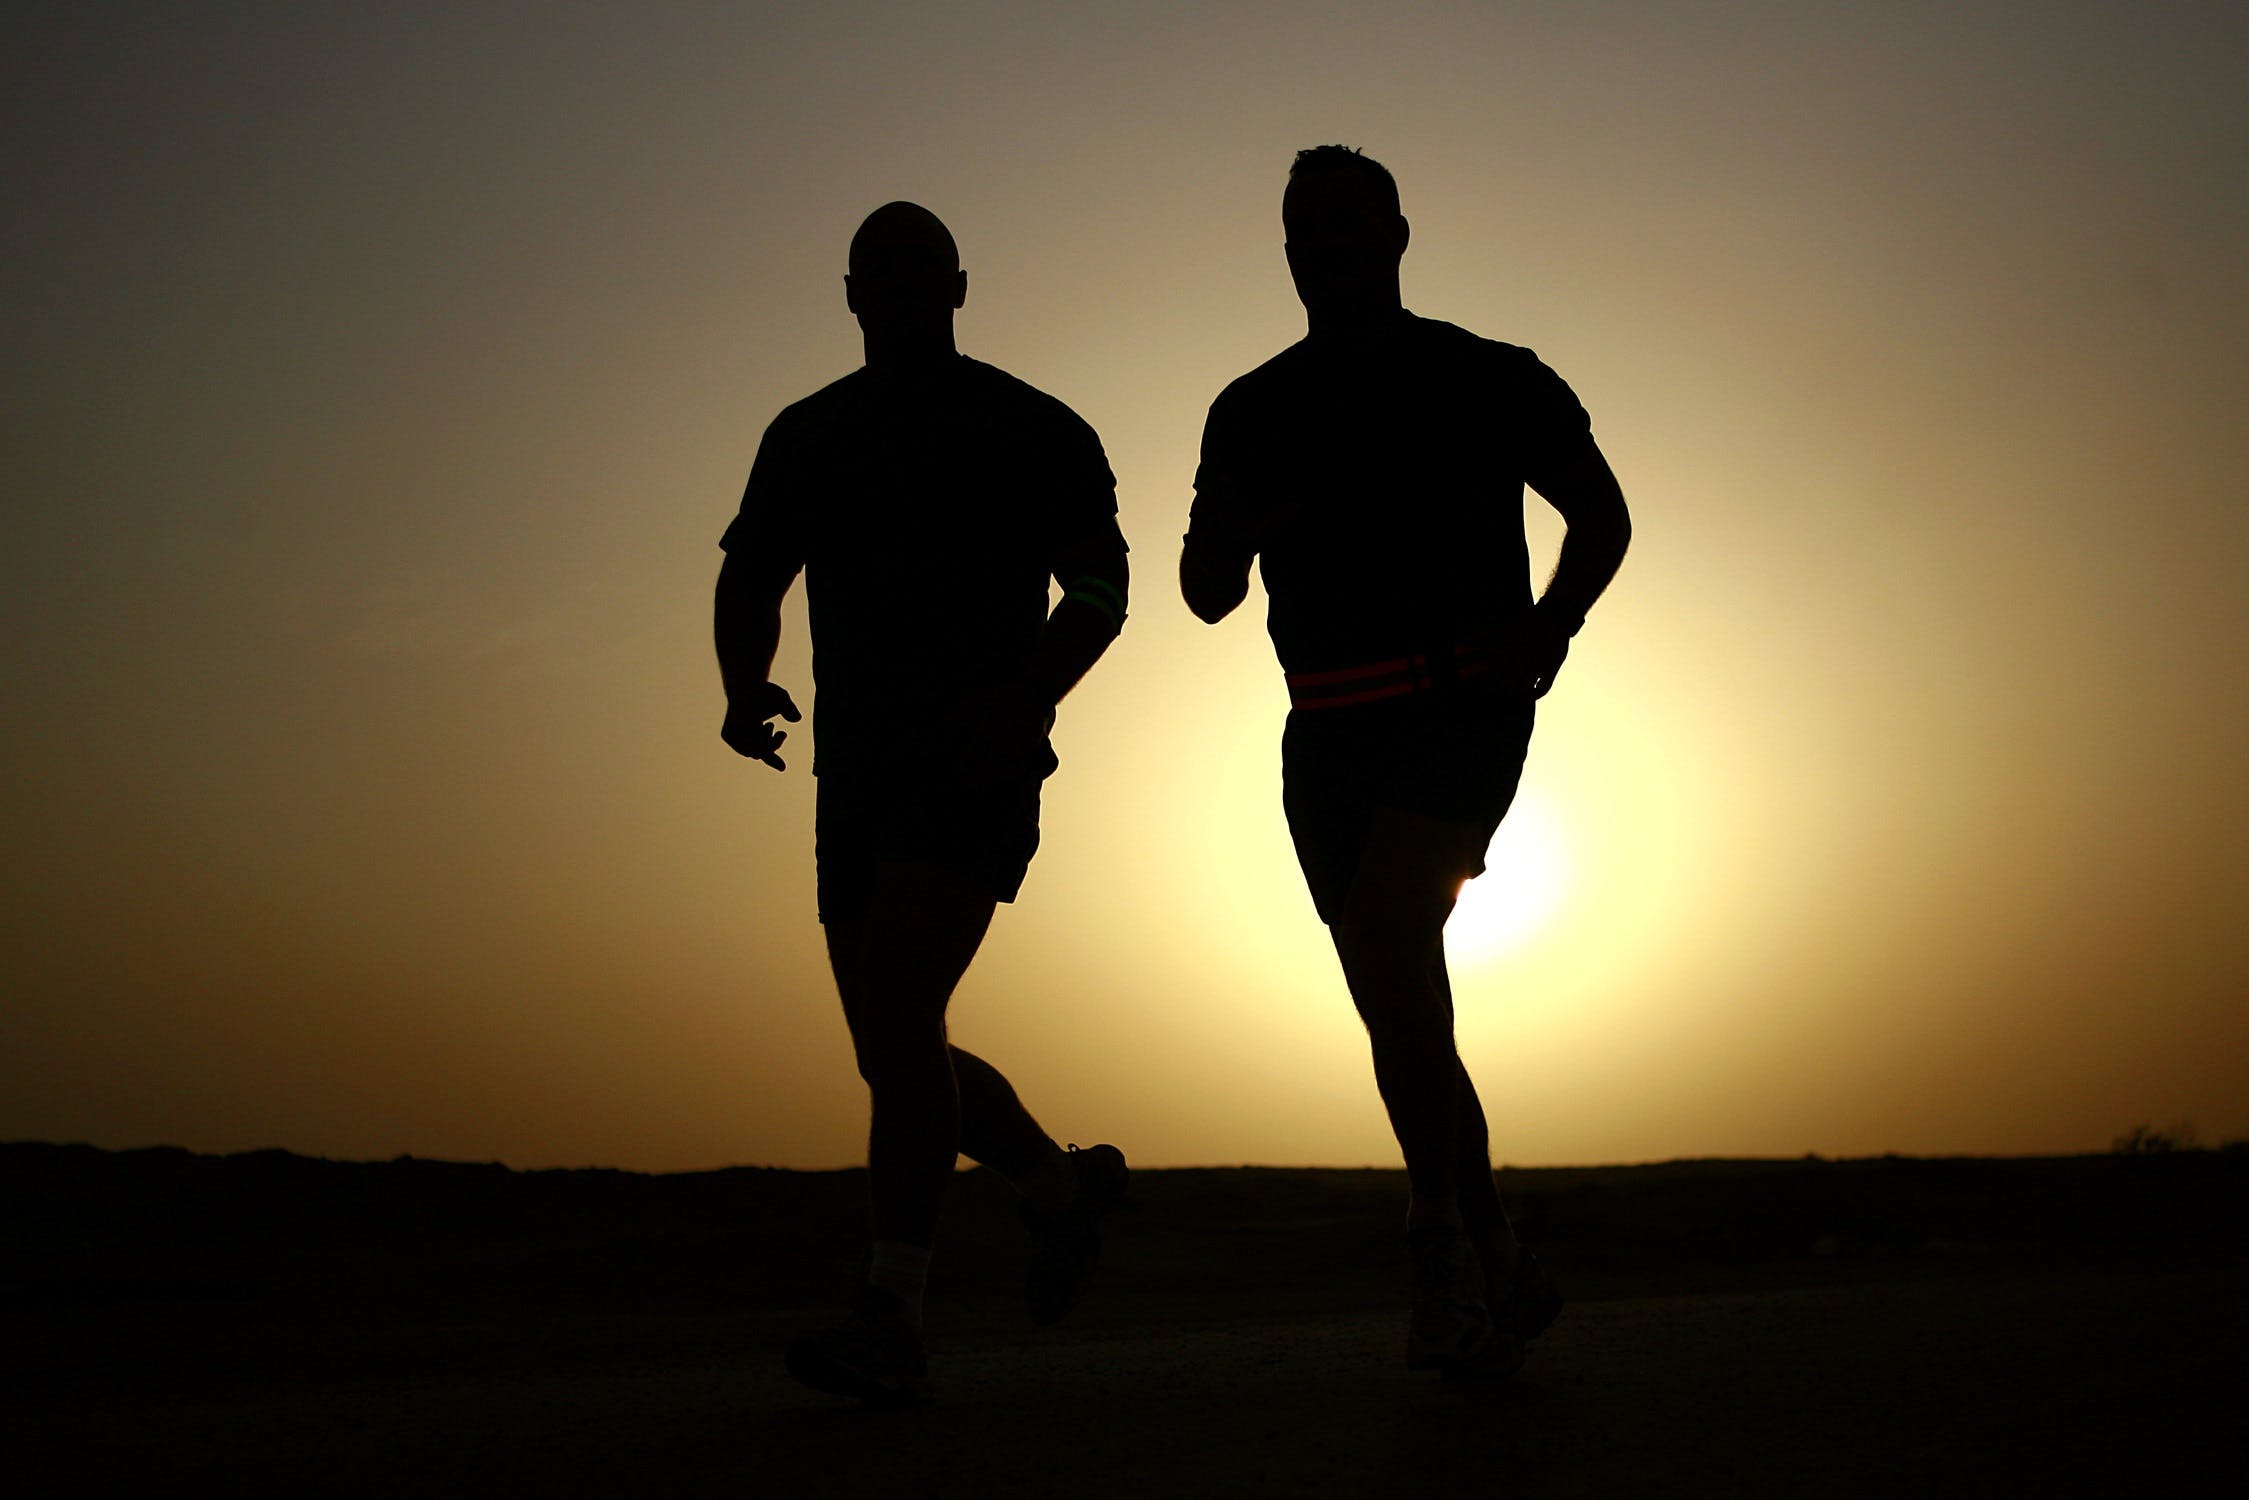 Two men jogging at sunset.